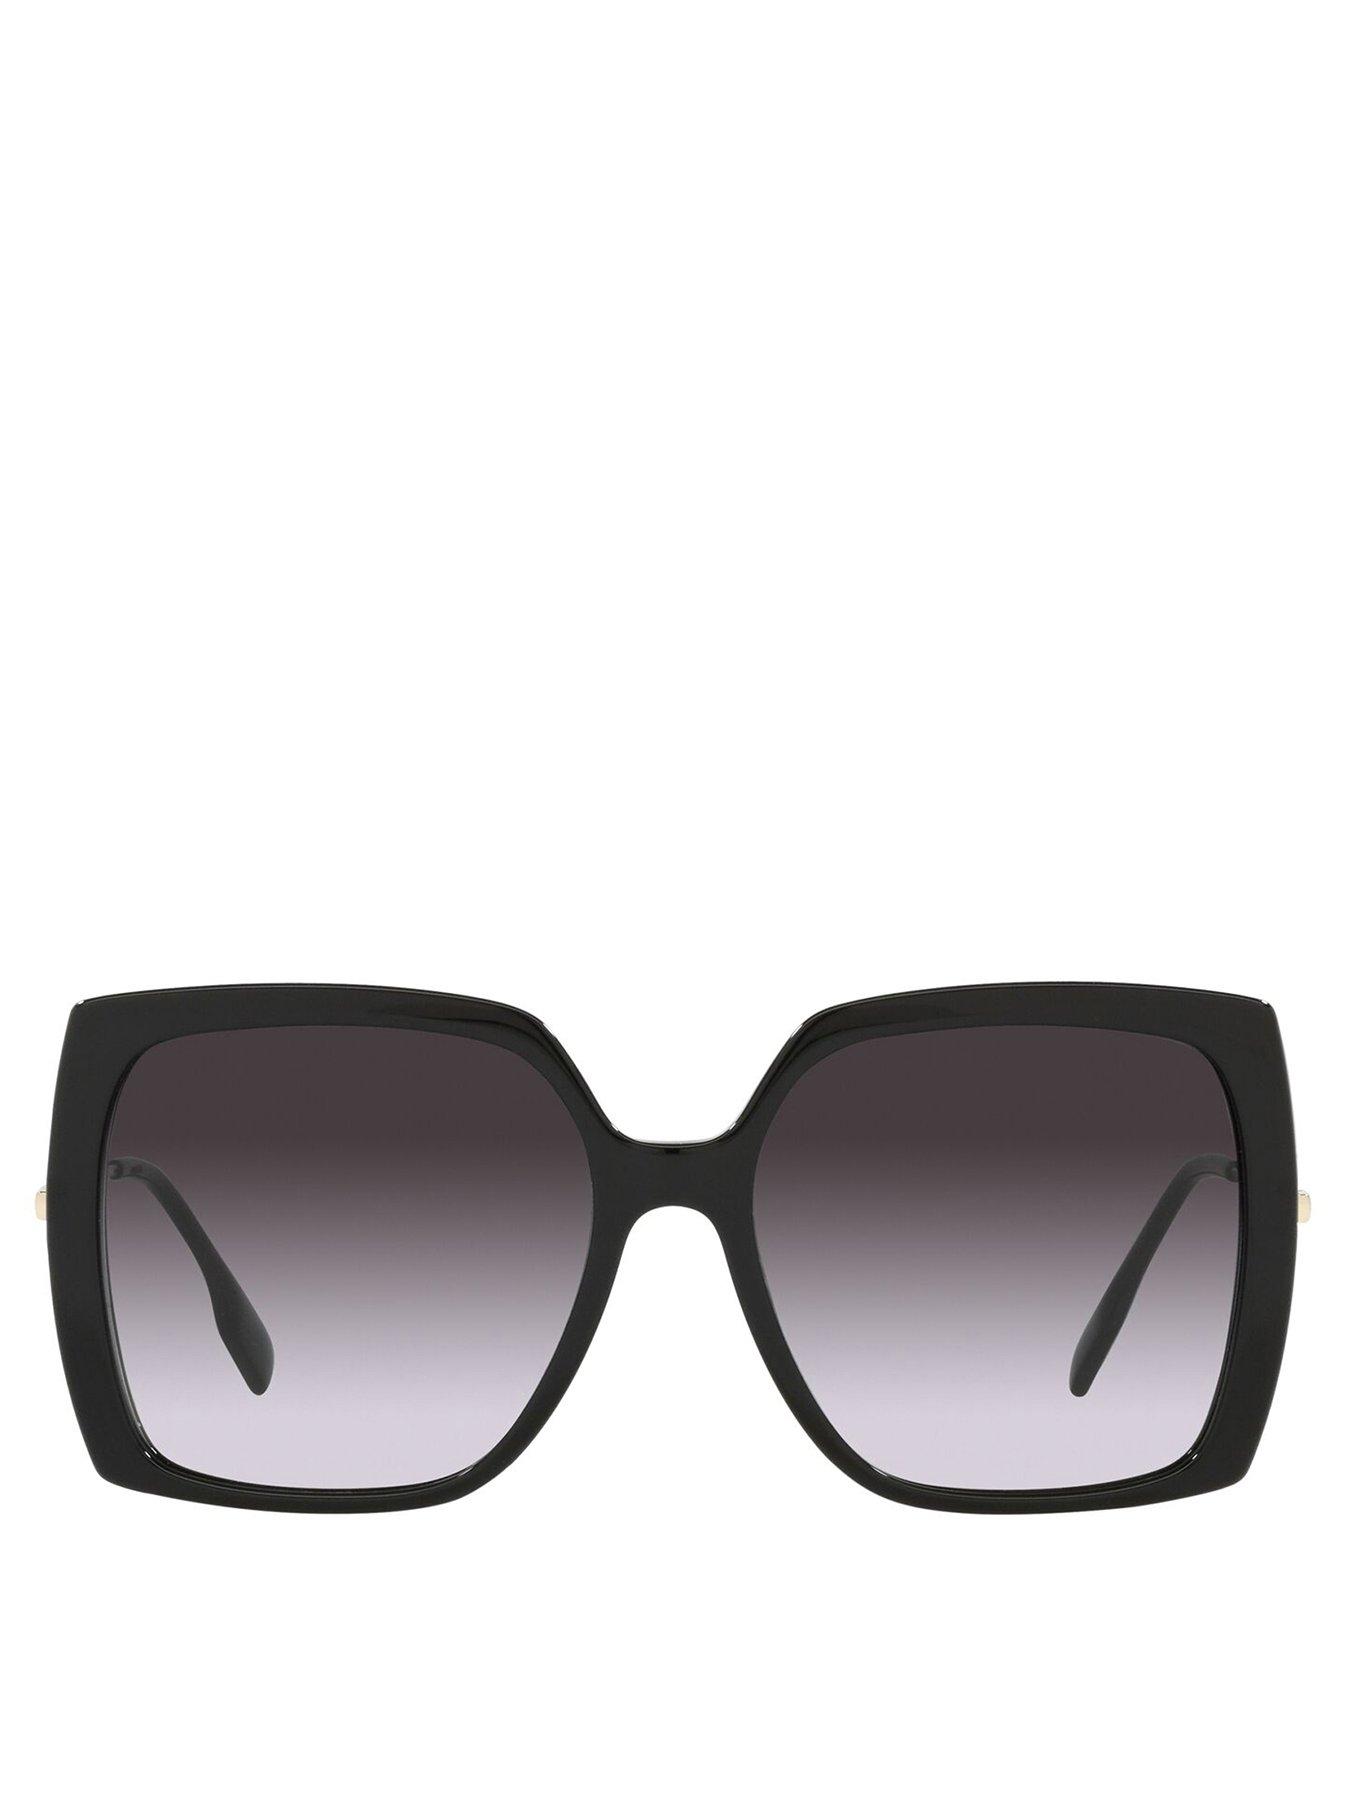 Accessories Luna Sunglasses - Black